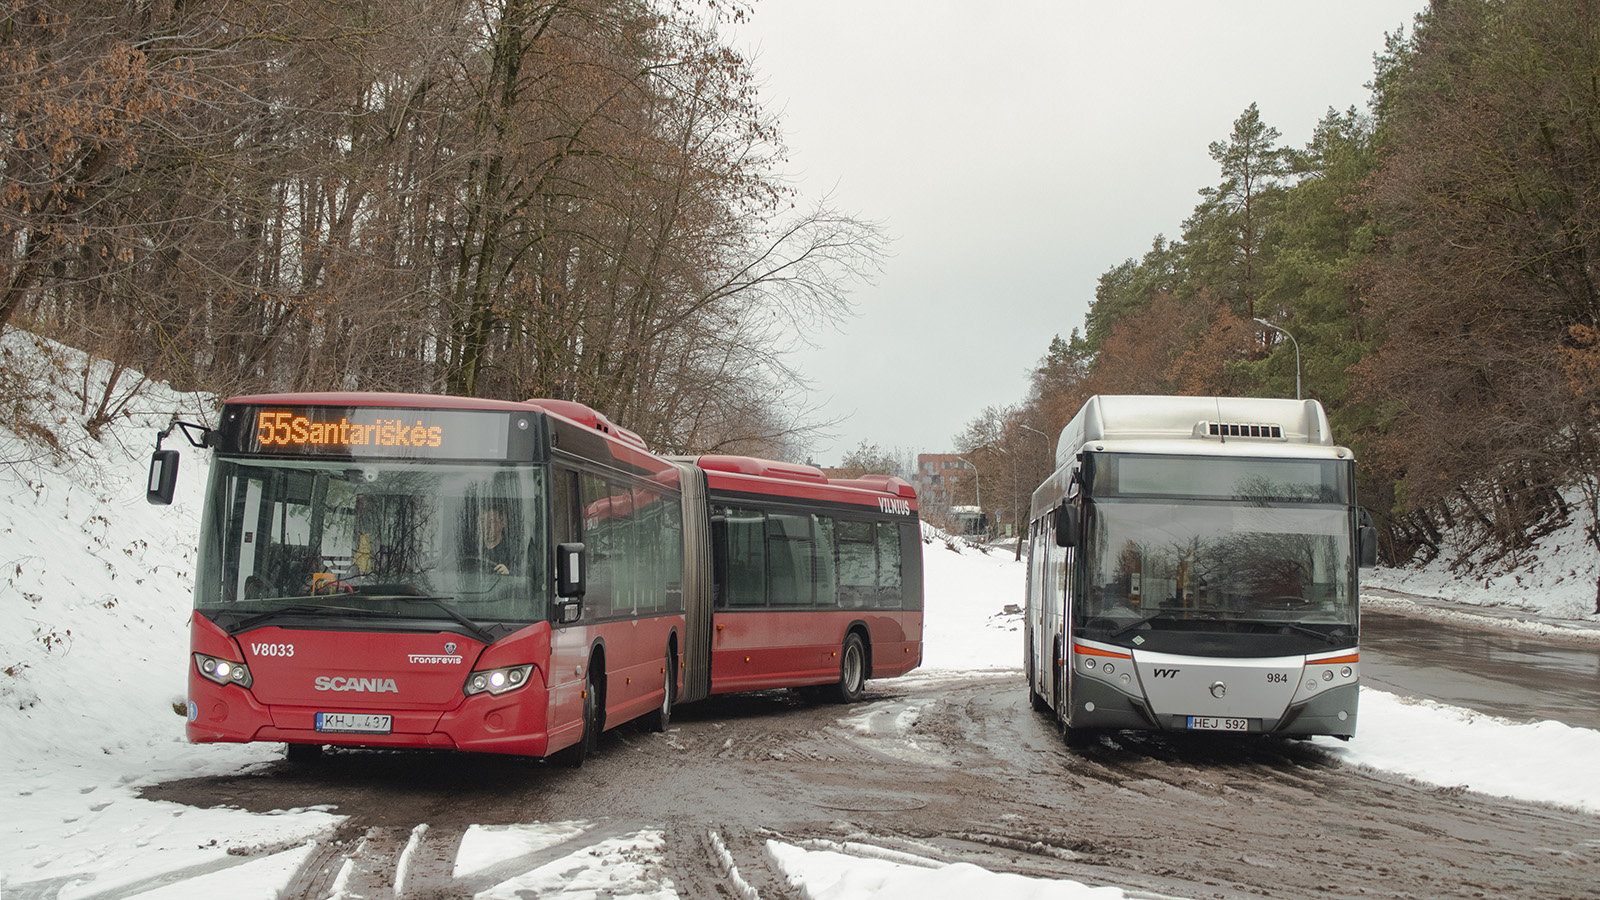 Vilnius, Scania Citywide LFA # V8033; Vilnius, Castrosúa City Versus CNG # 984